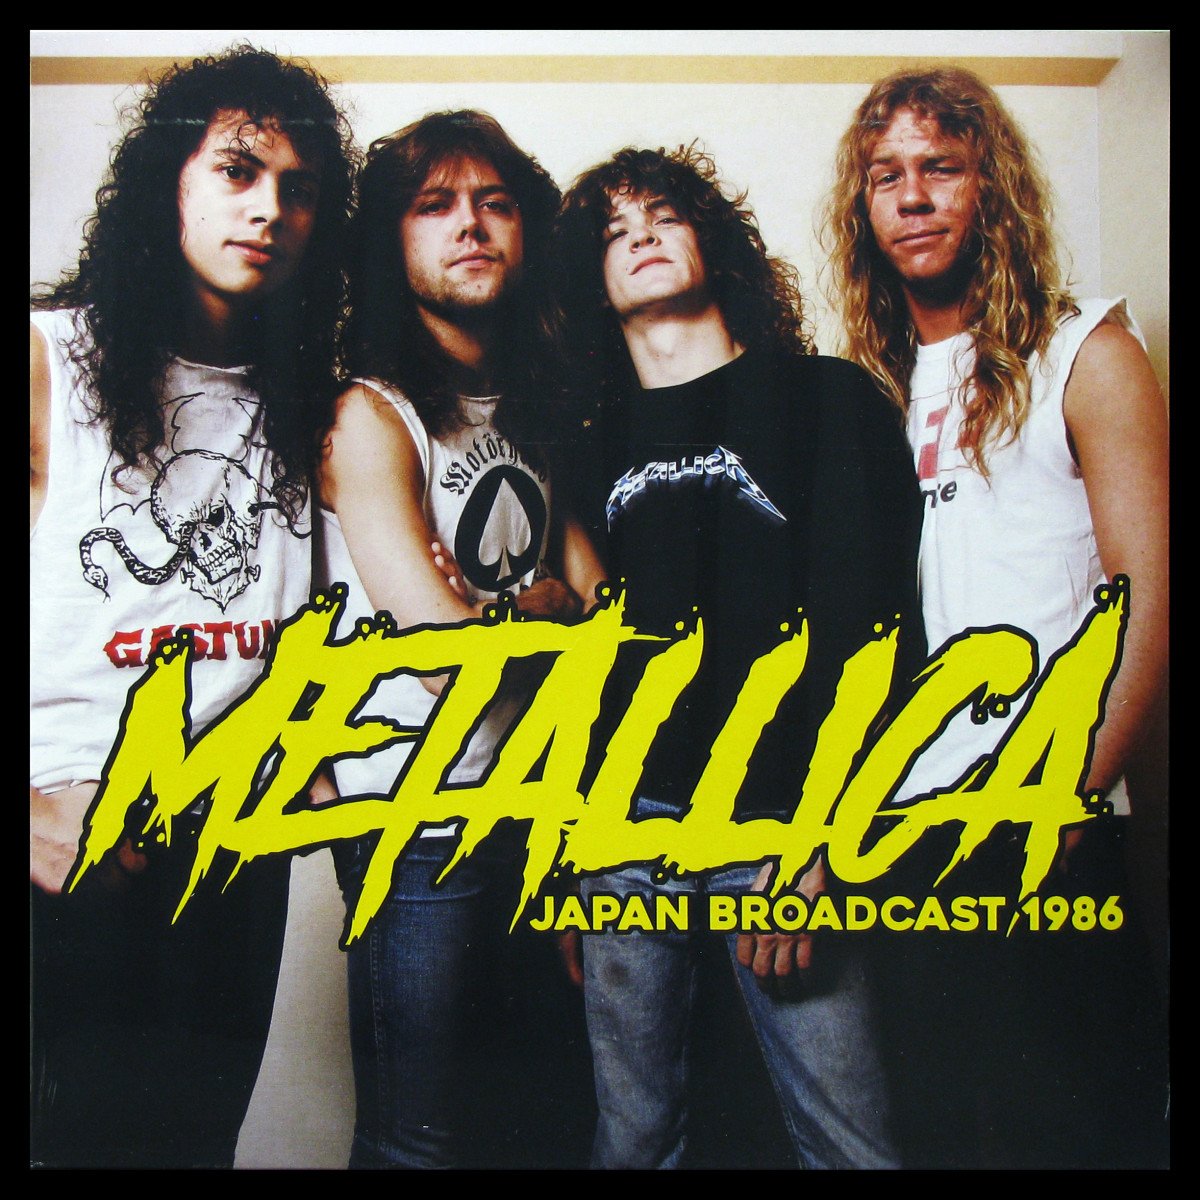 Japan Broadcast 1986